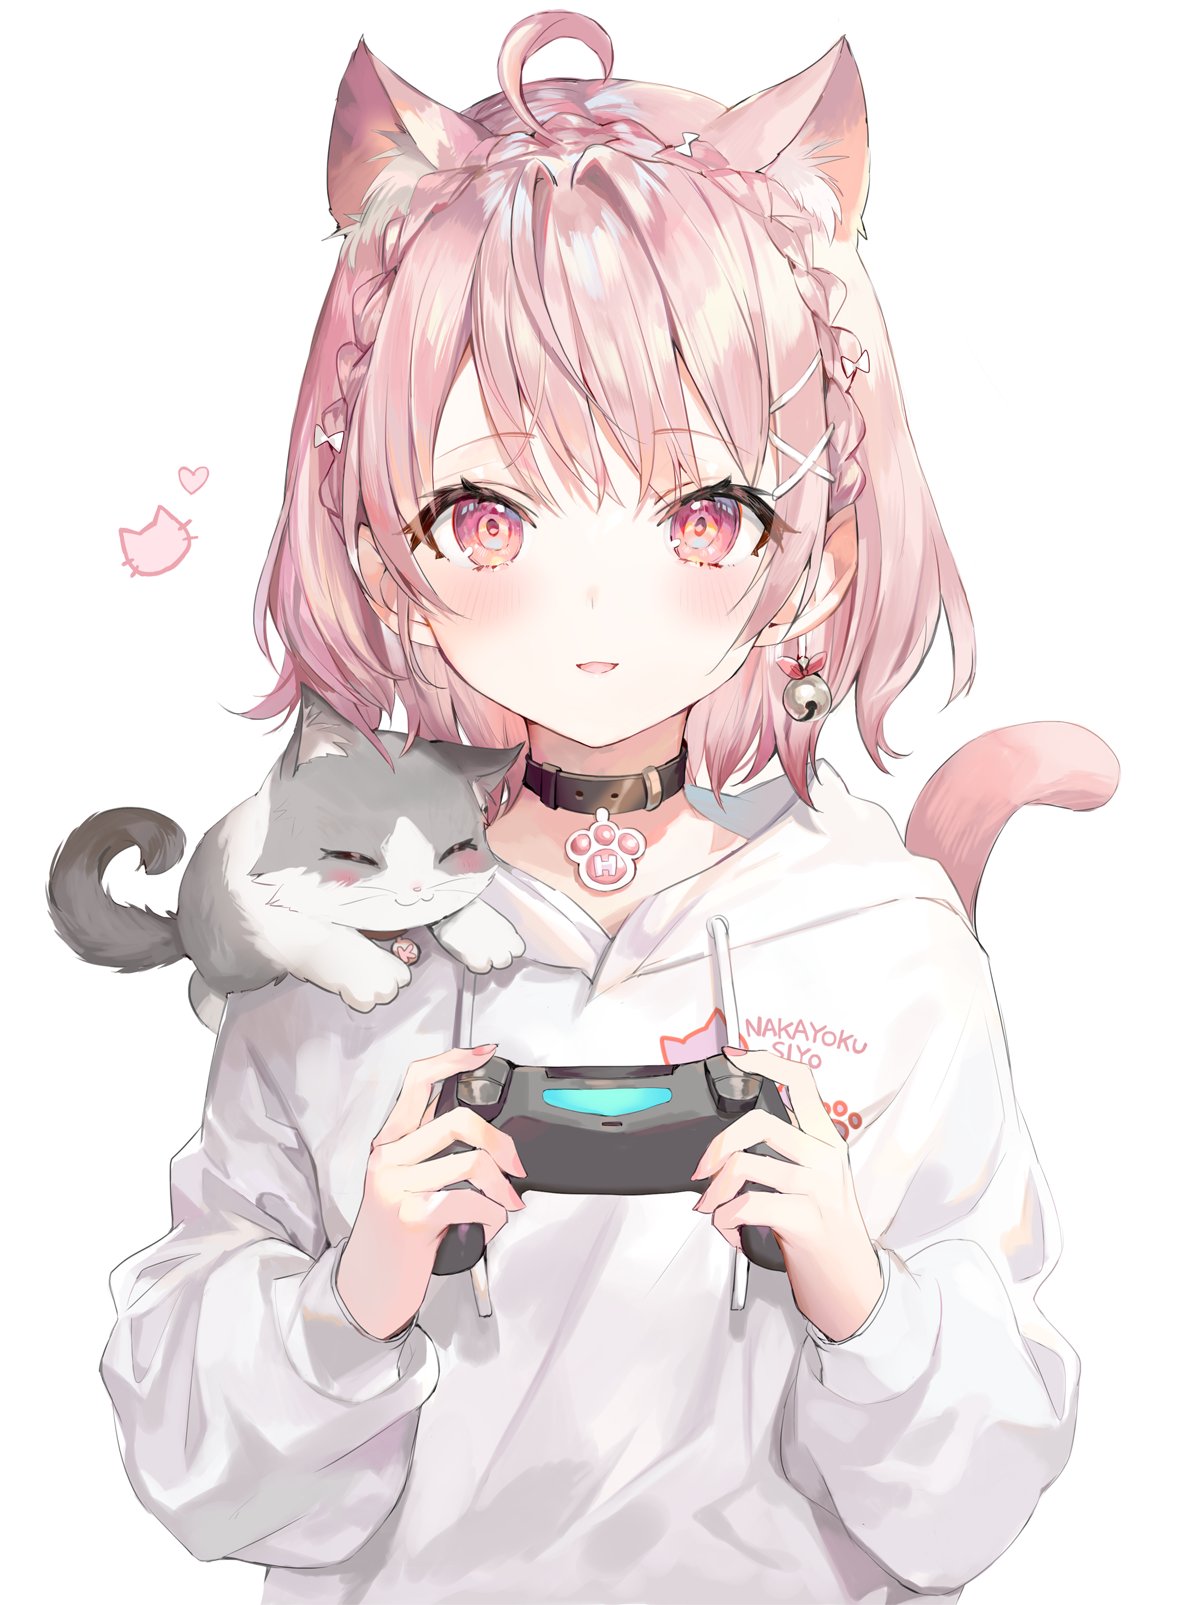 Cute anime cat girl pink